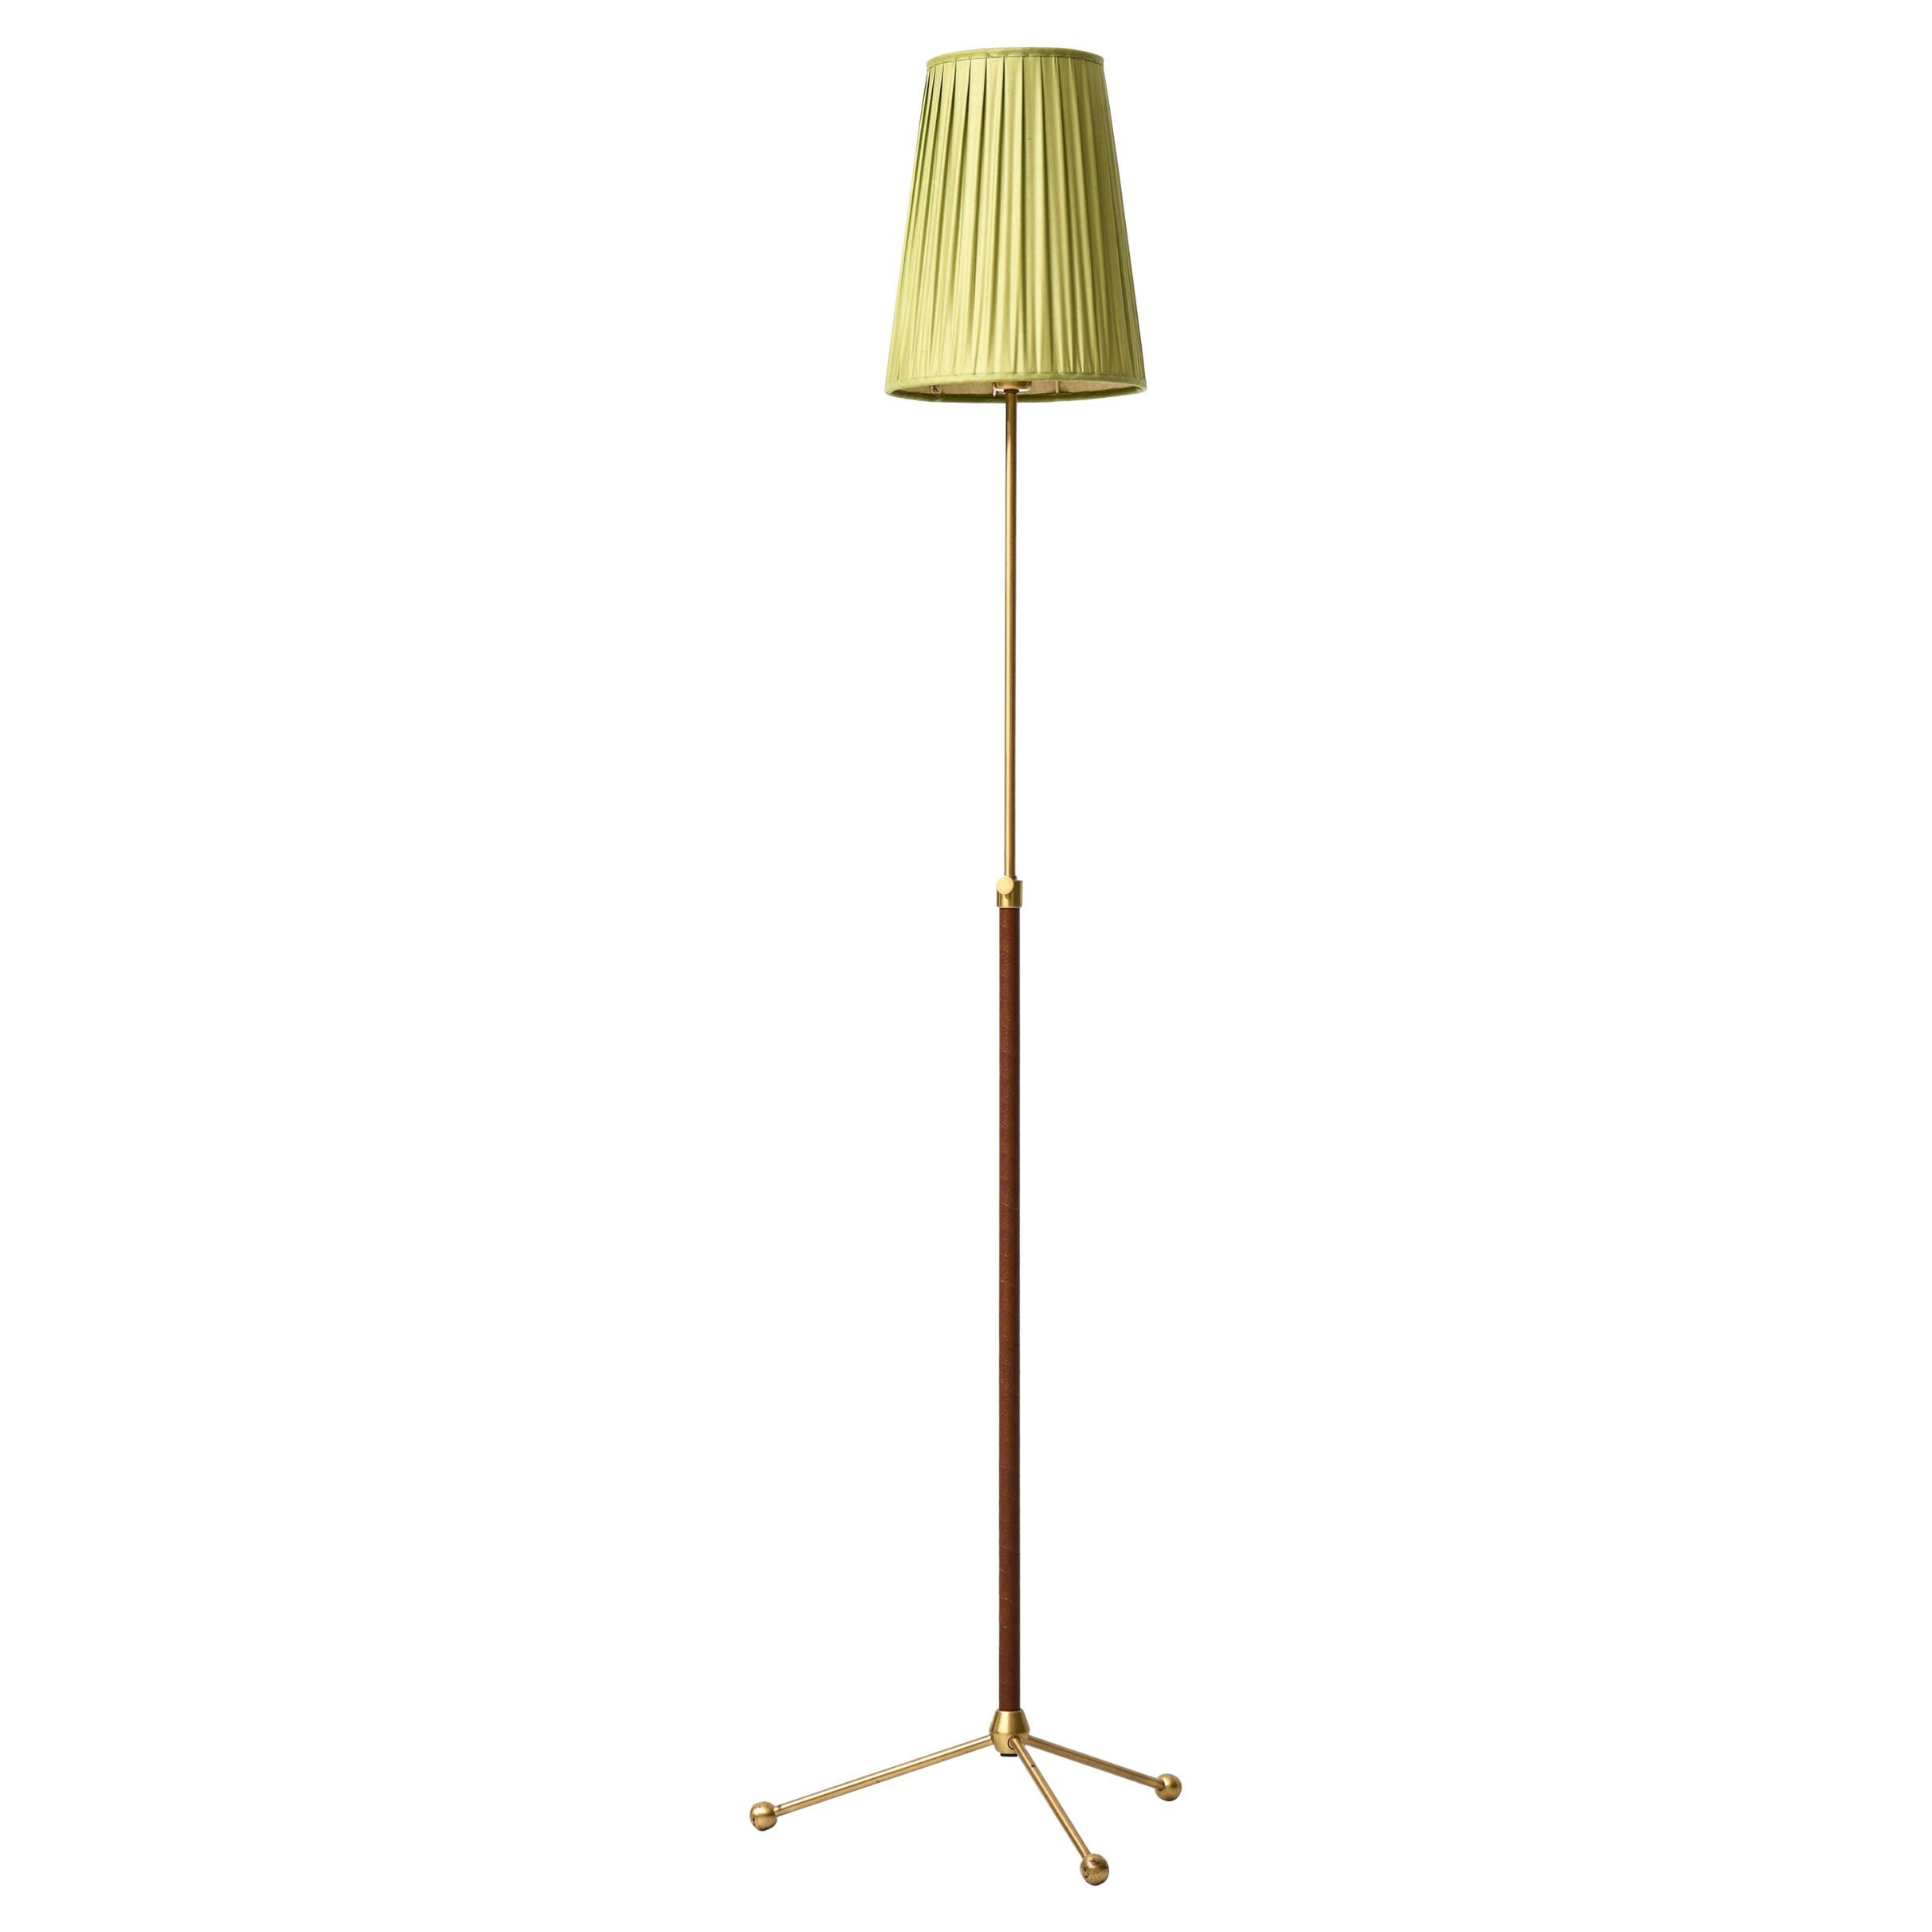 Hans Bergström Floor Lamp Model 544 Produced by Ateljé Lyktan in Åhus, Sweden